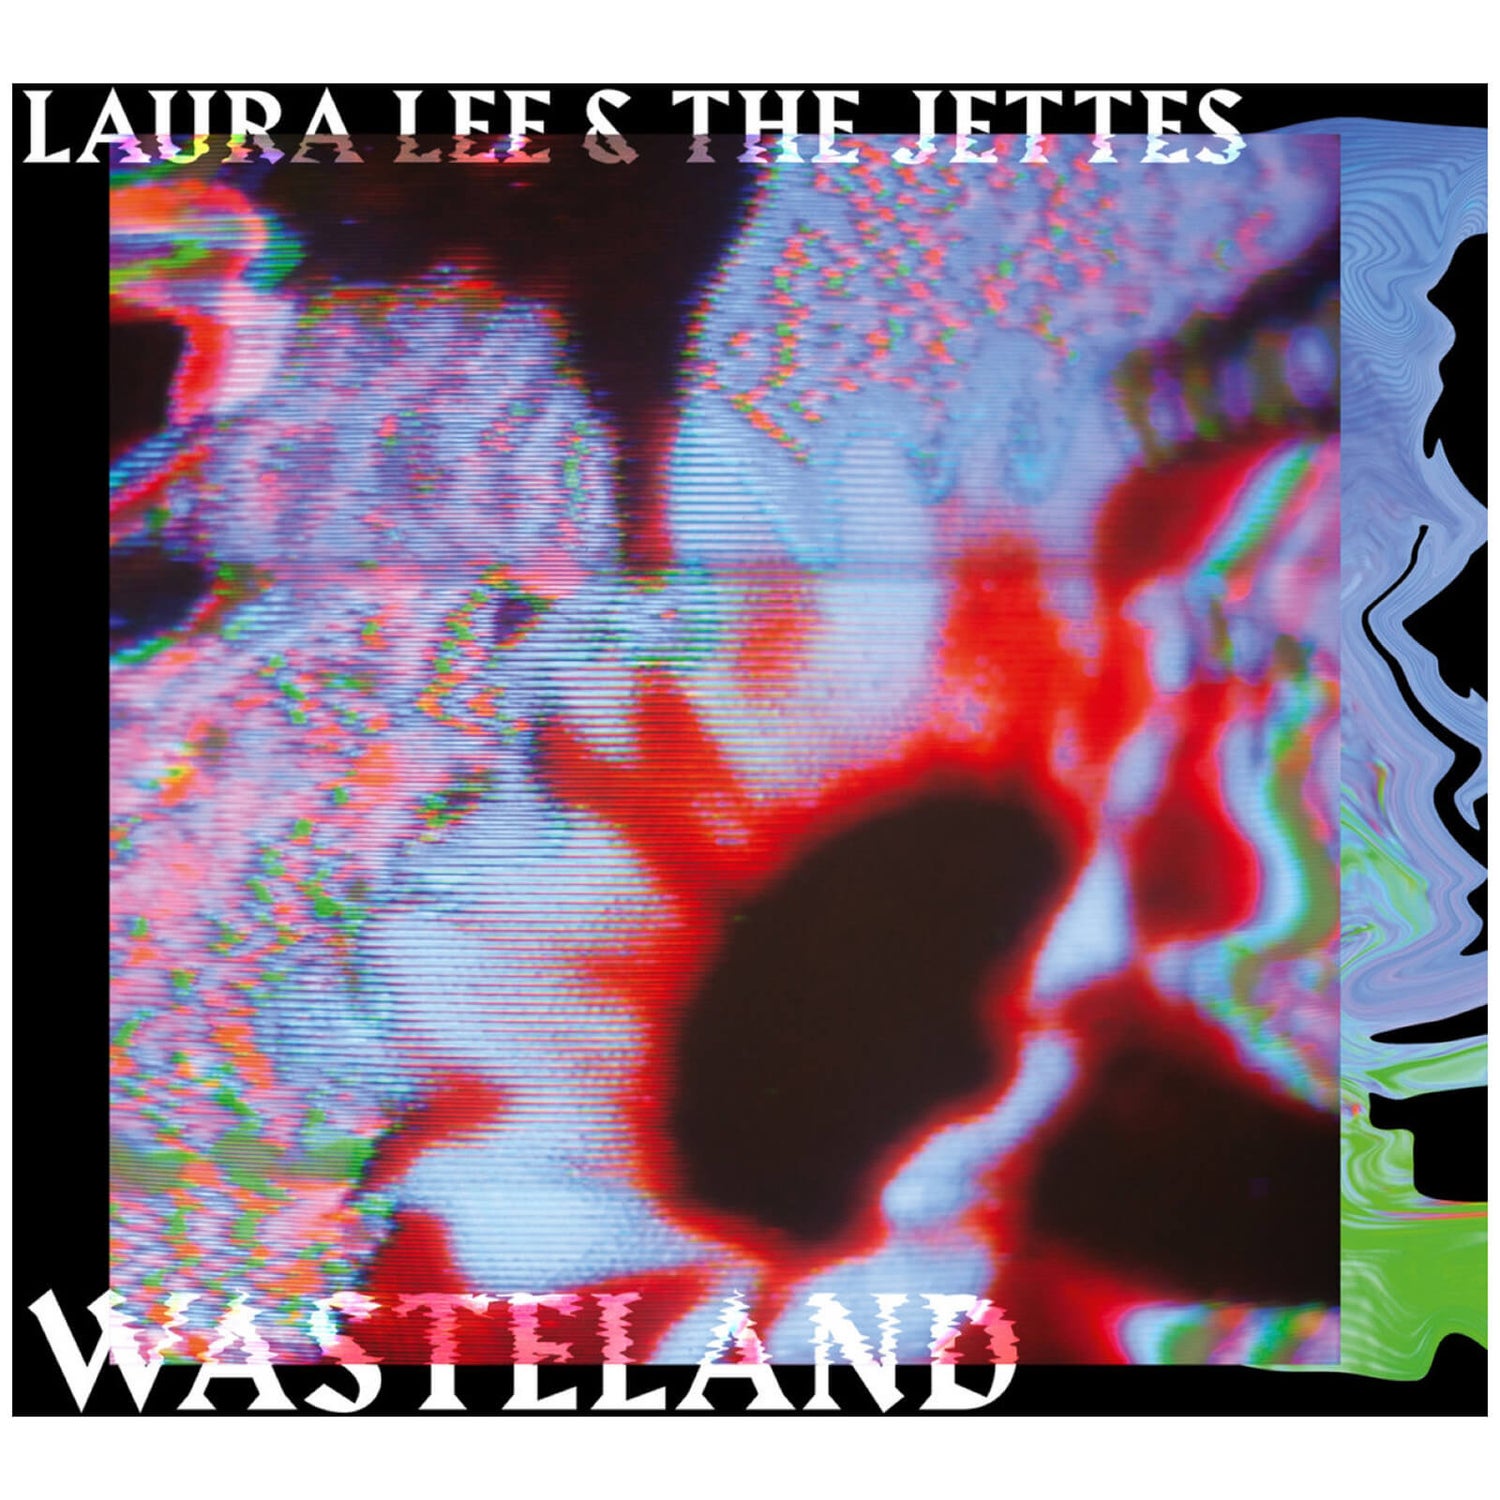 Laura Lee & The Jettes - Wasteland Vinyl